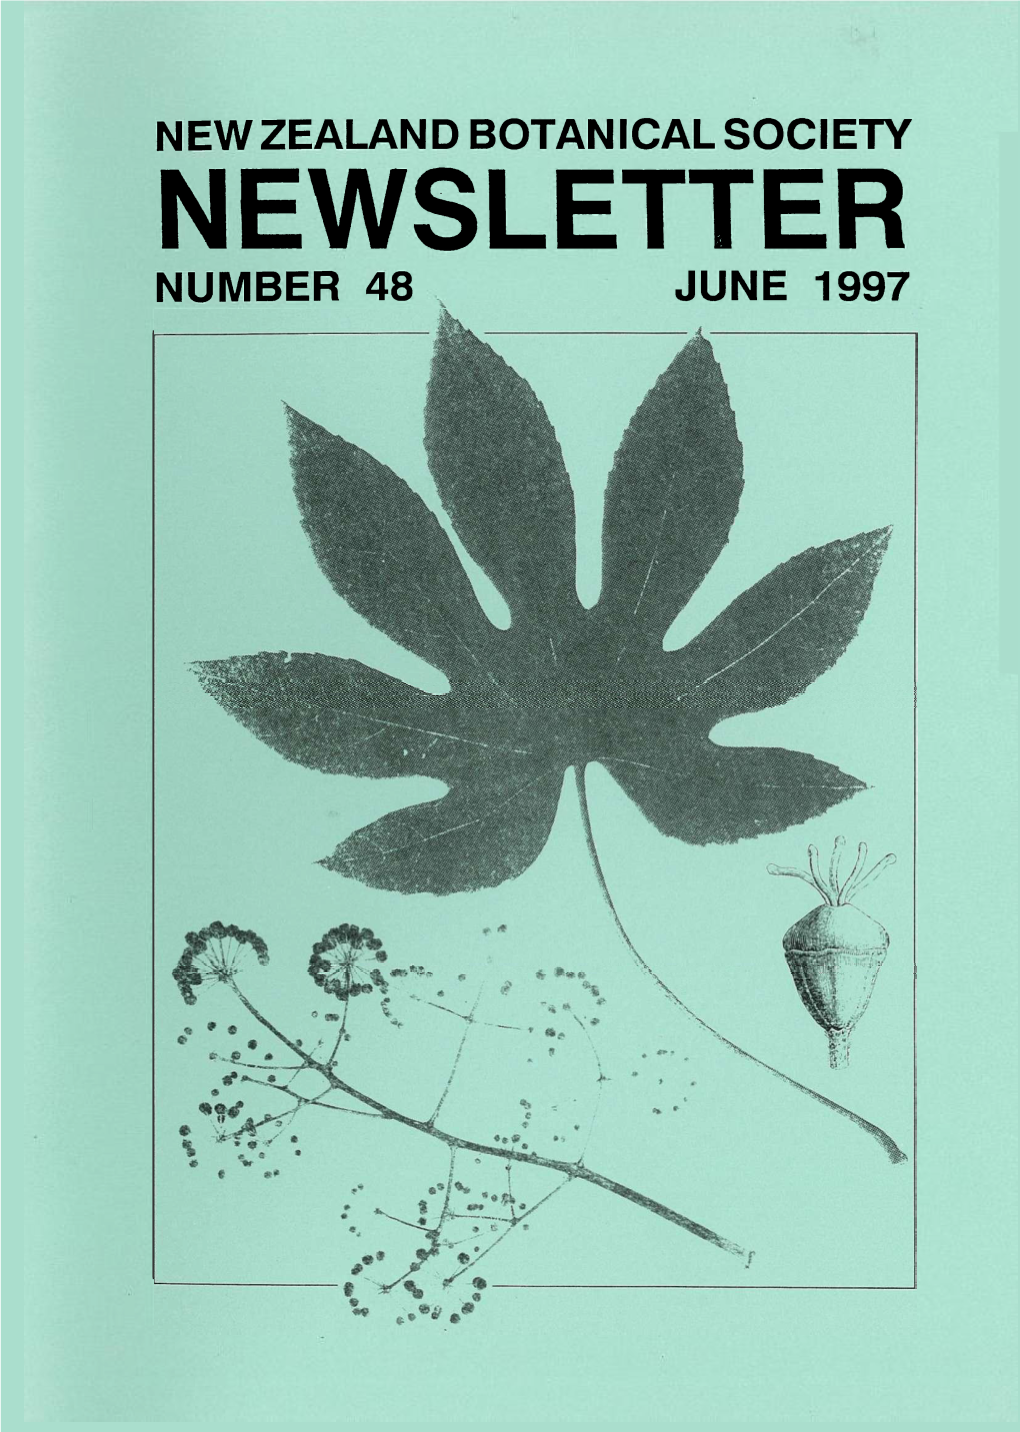 Newsletter Number 48 June 1997 New Zealand Botanical Society Newsletter Number 48 June 1997